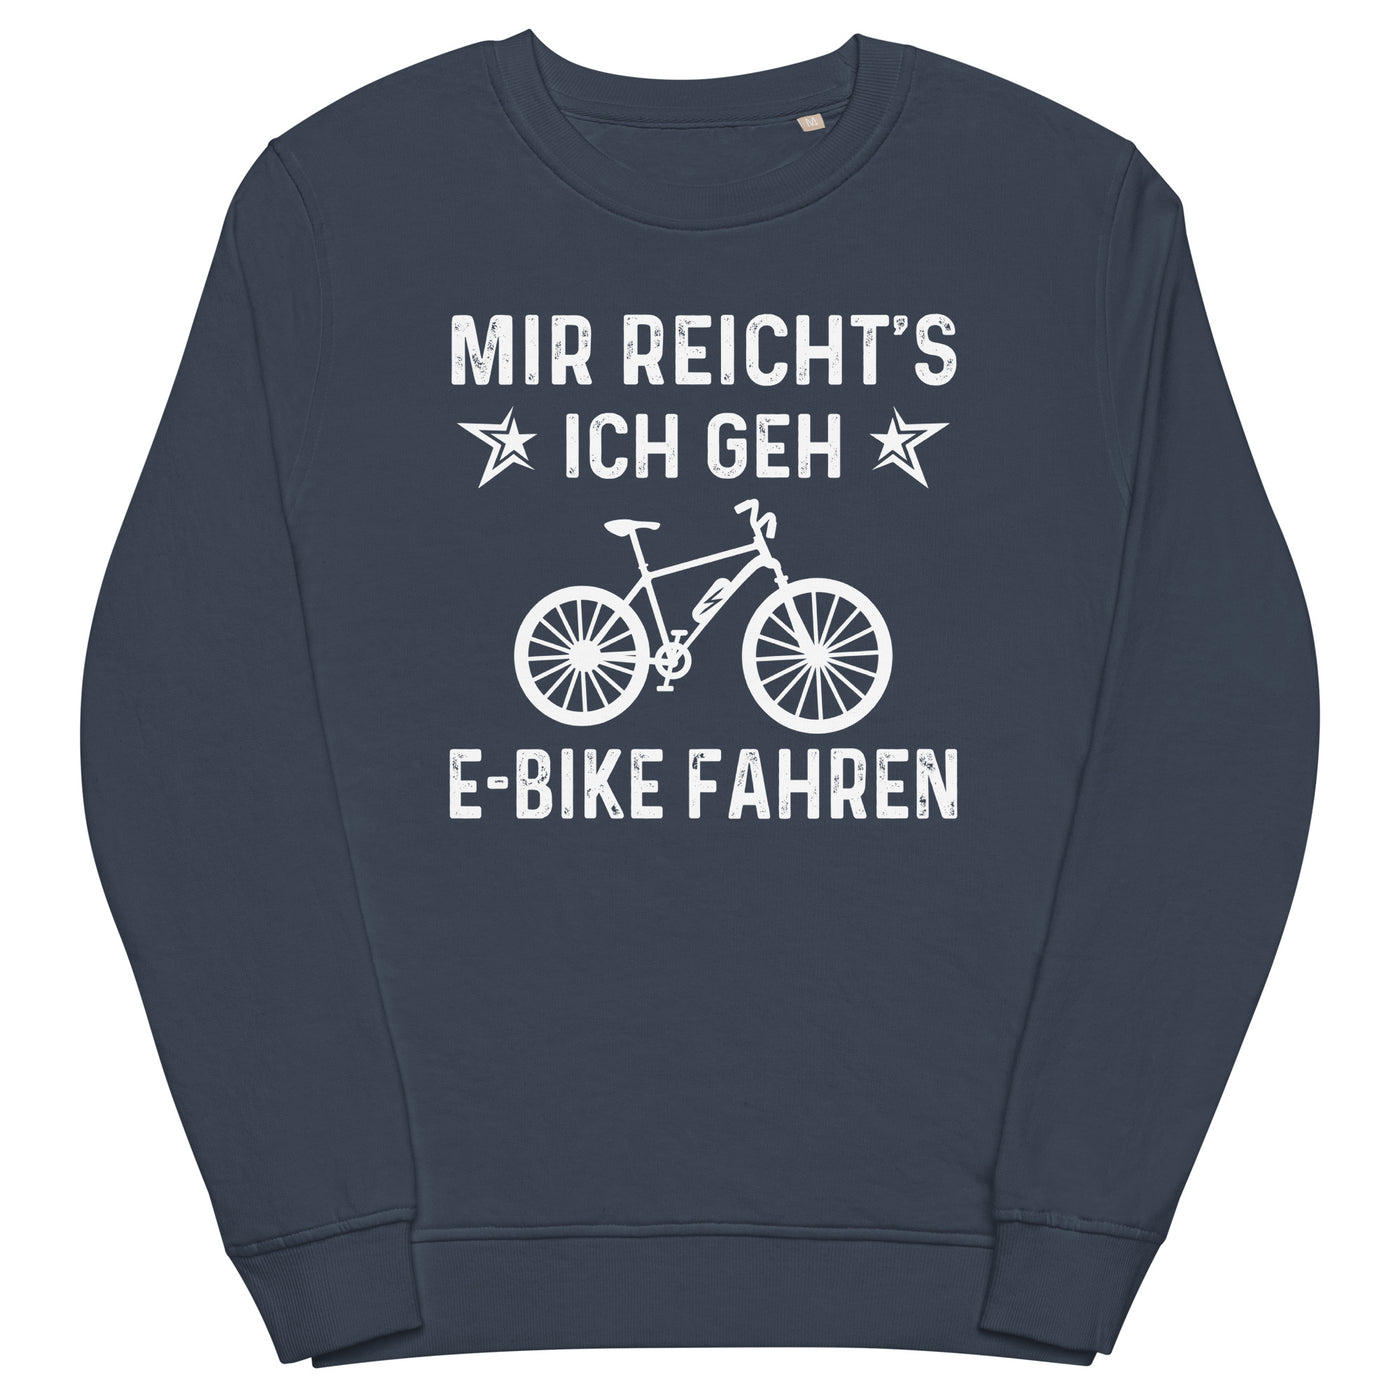 Mir Reicht's Ich Gen E-Bike Fahren - Unisex Premium Organic Sweatshirt e-bike xxx yyy zzz French Navy